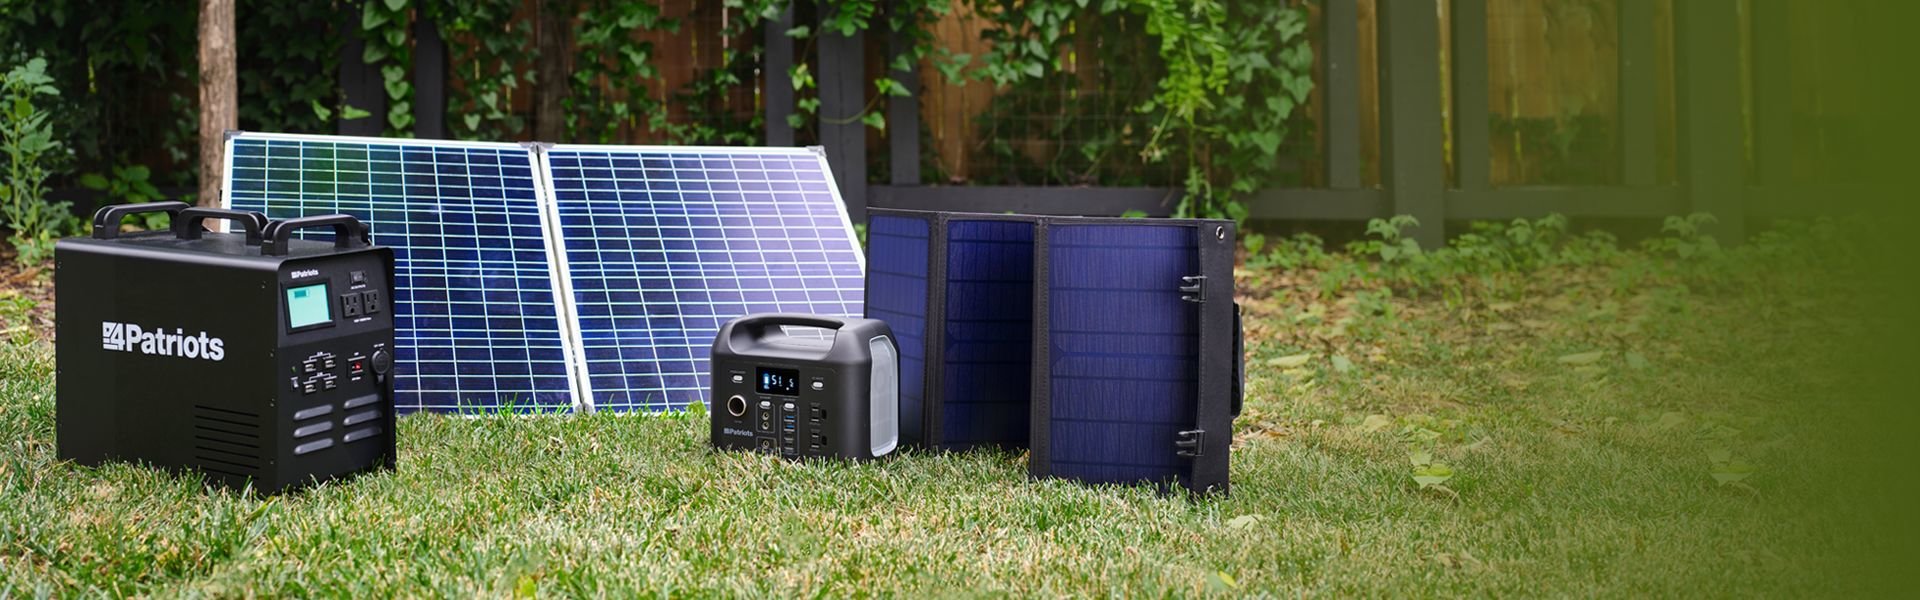 Patriot Power Generator 1800, Patriot Power Sidekick, 100-watt solar panel, and 40-watt solar panel setup in a backyard.